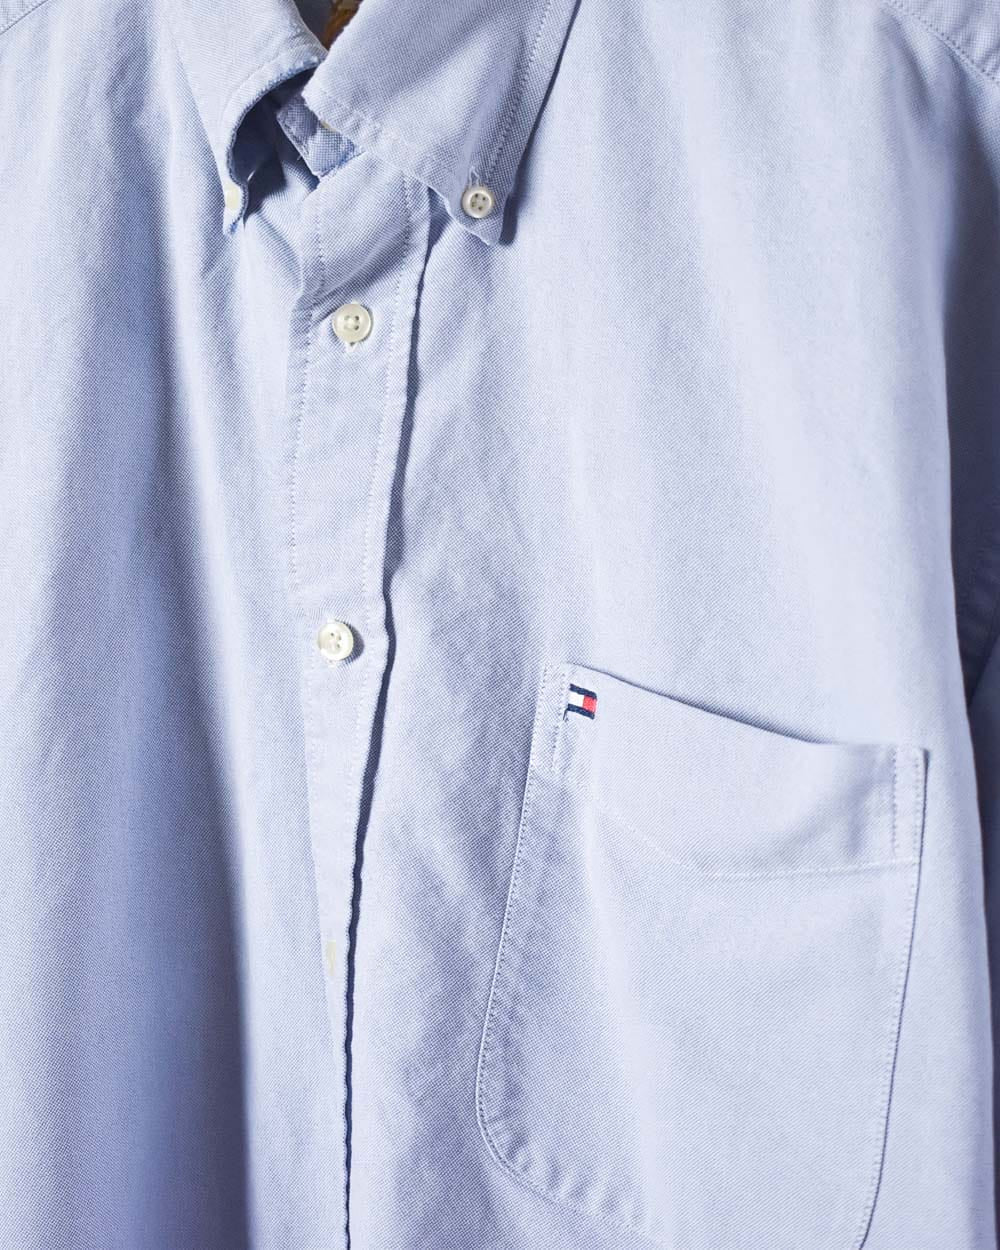 BabyBlue Tommy Hilfiger Short Sleeved Shirt - Large